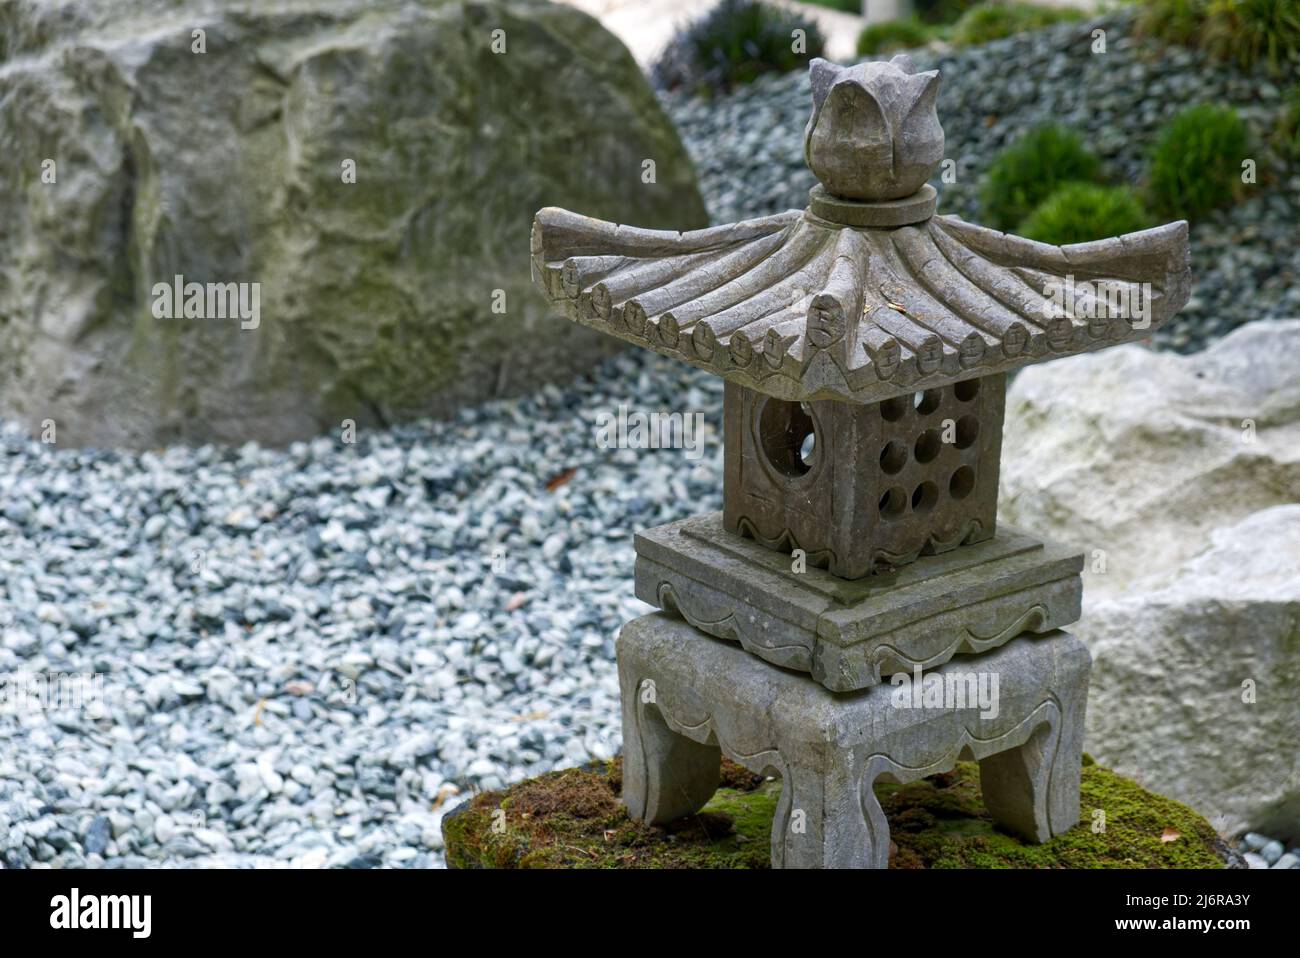 stone temple in a zen garden Stock Photo